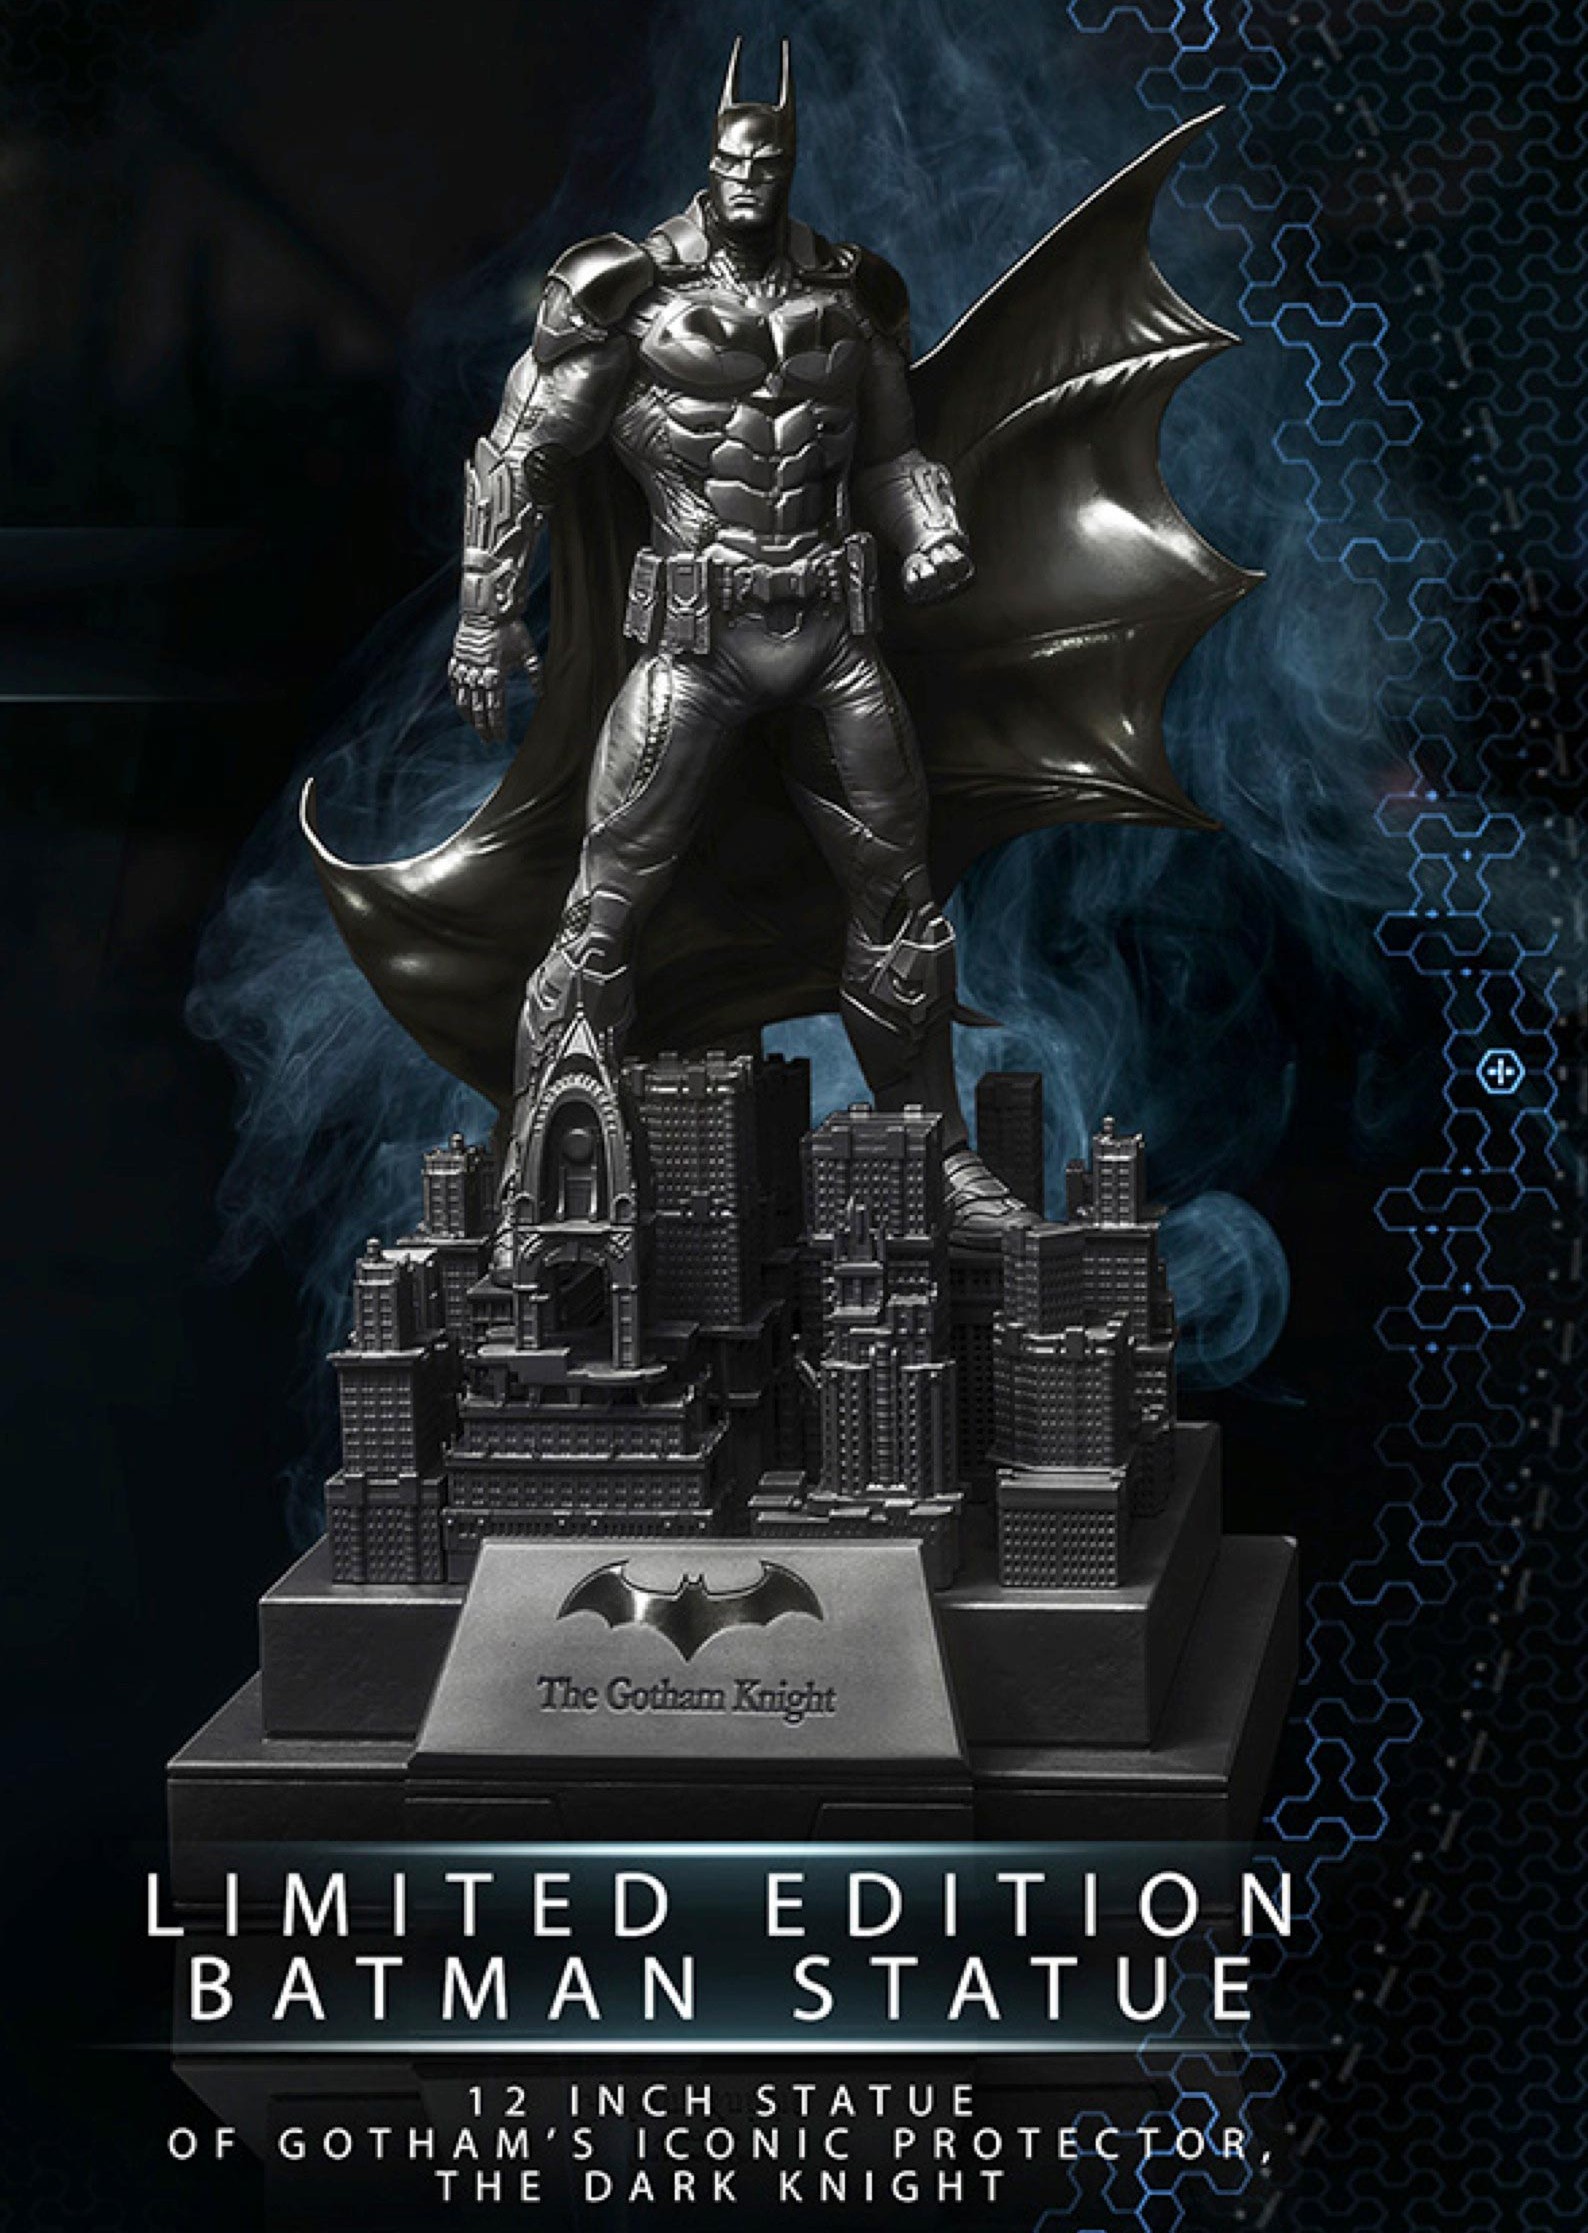 Batman dark knight statue also lights up 